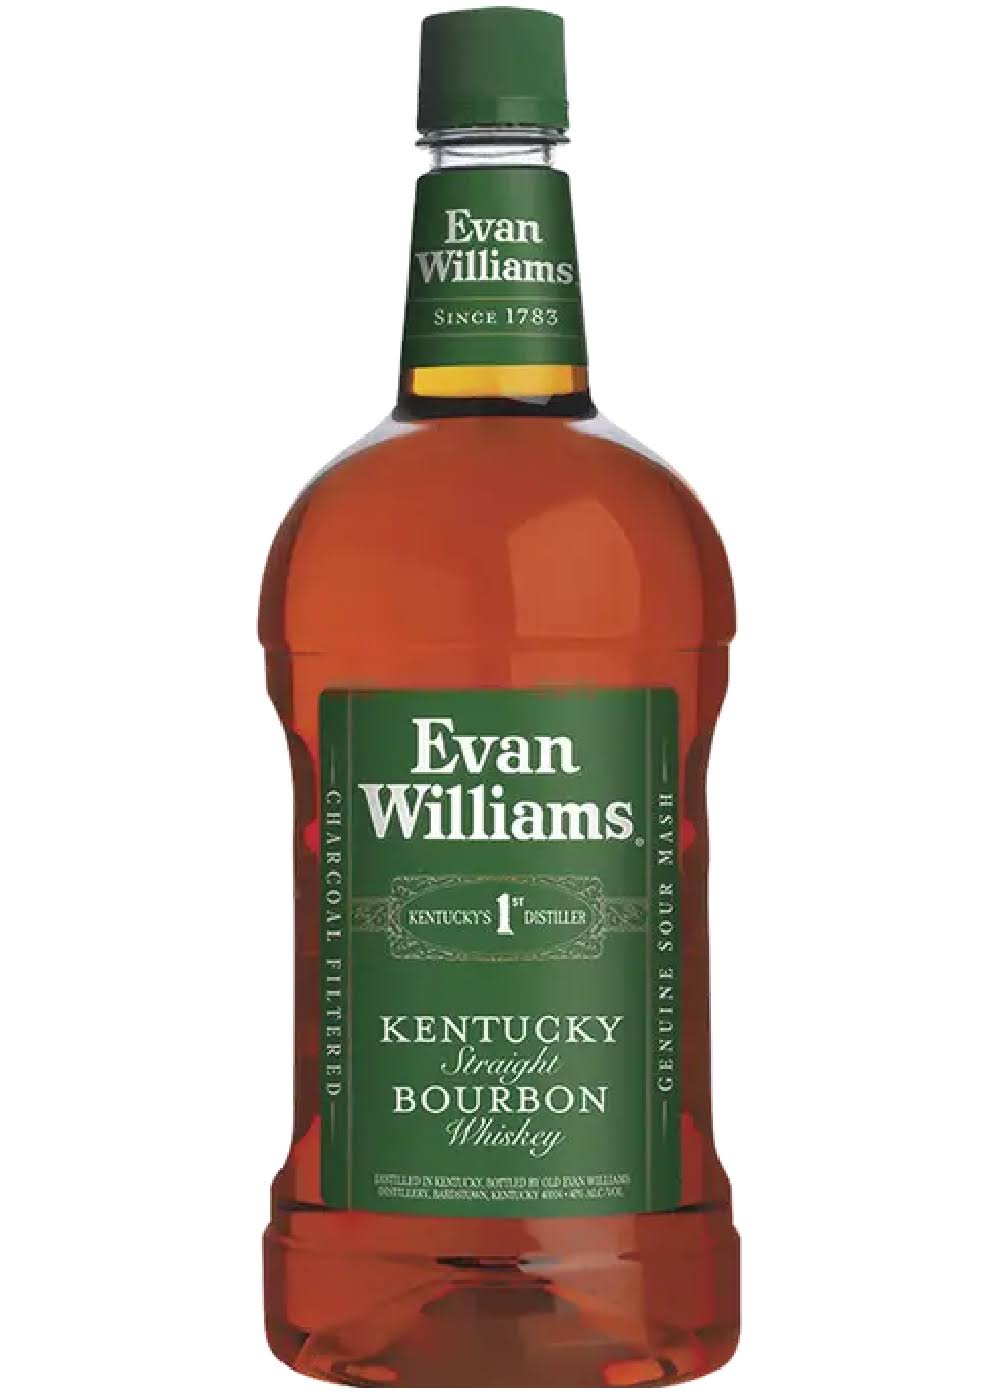 Evan Williams Kentucky Straight Bourbon Whiskey - 1.75 L bottle